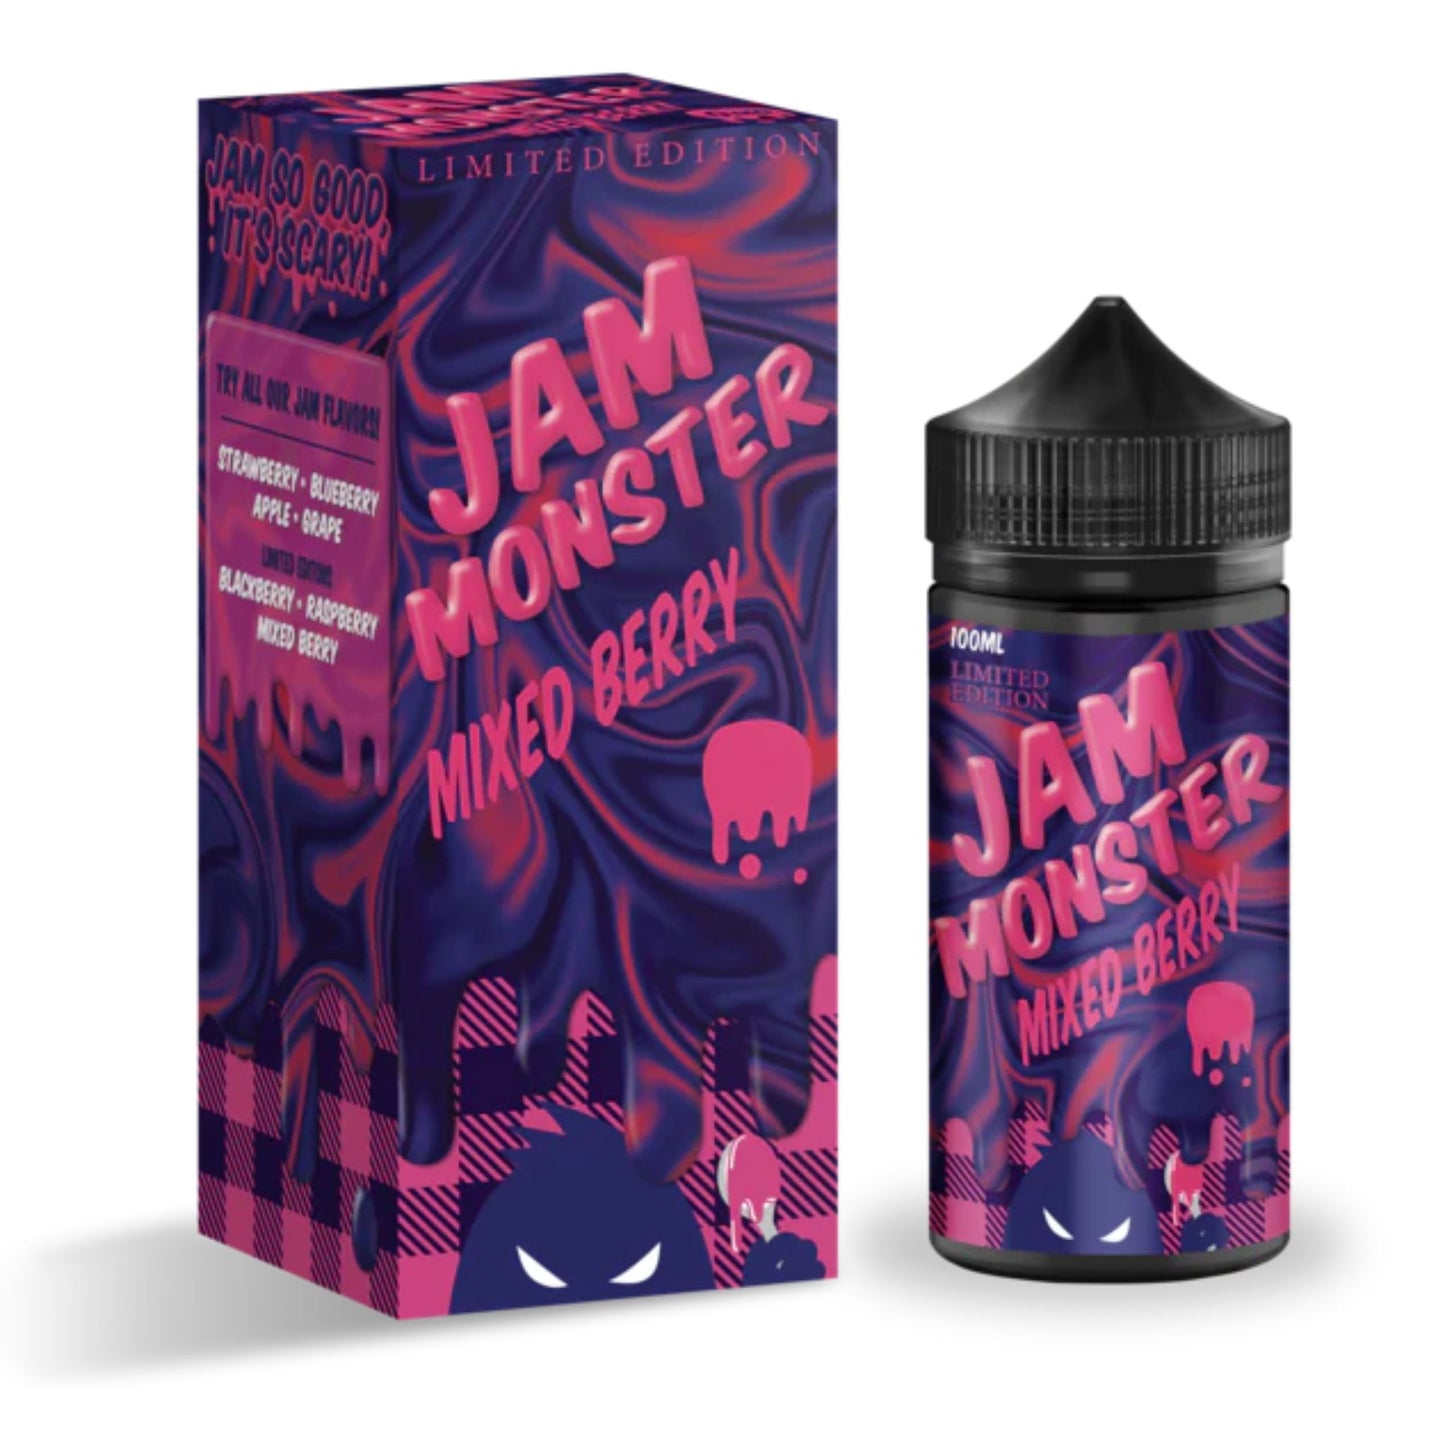 jam monster mixed berry e-liquid 100ml bottle and box